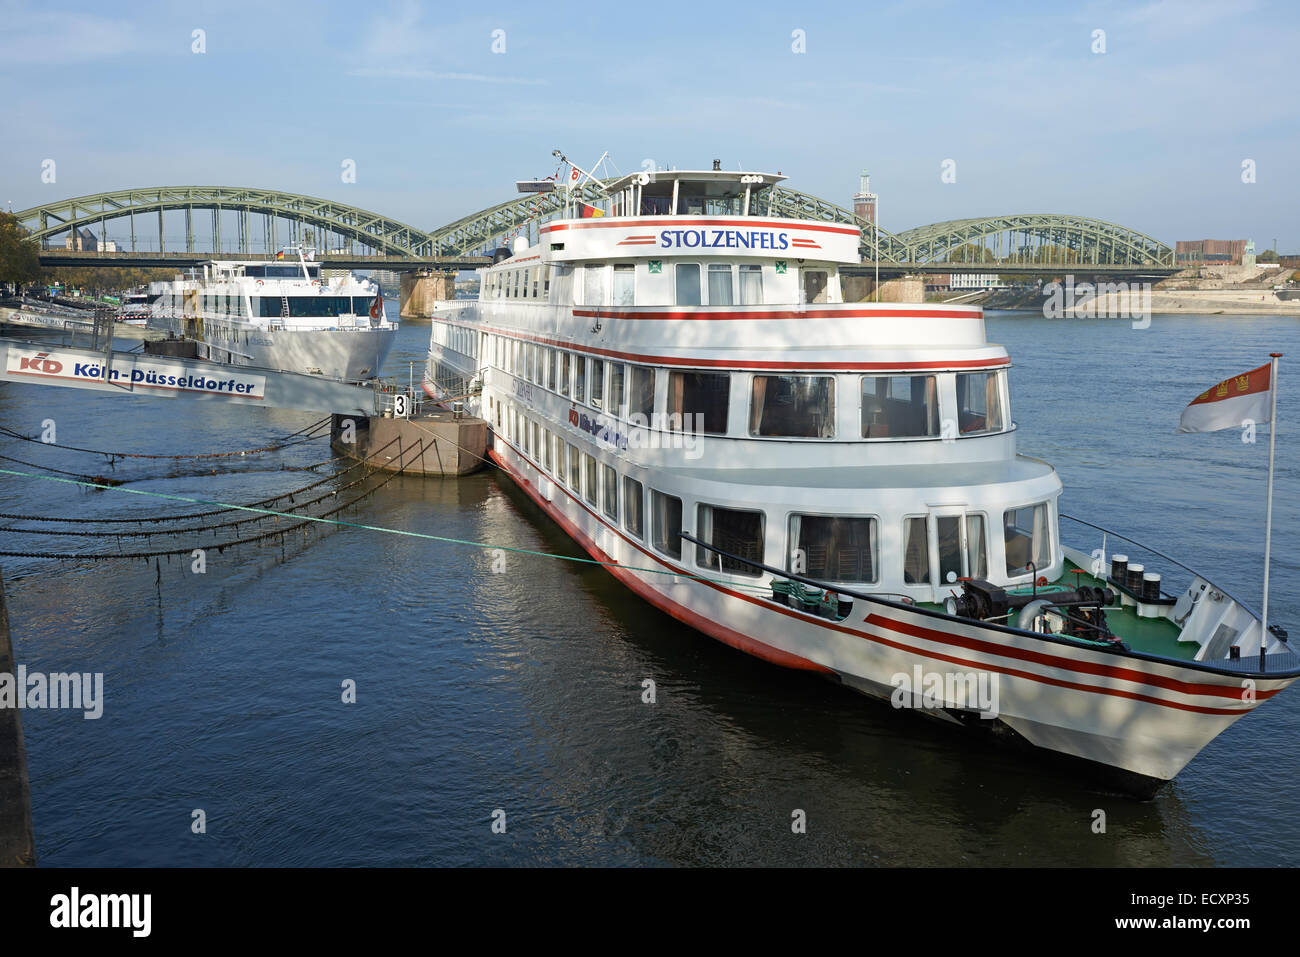 KD Koln-Dusseldorfer fiume Reno incrociatori passeggero, Colonia, Germania. Foto Stock